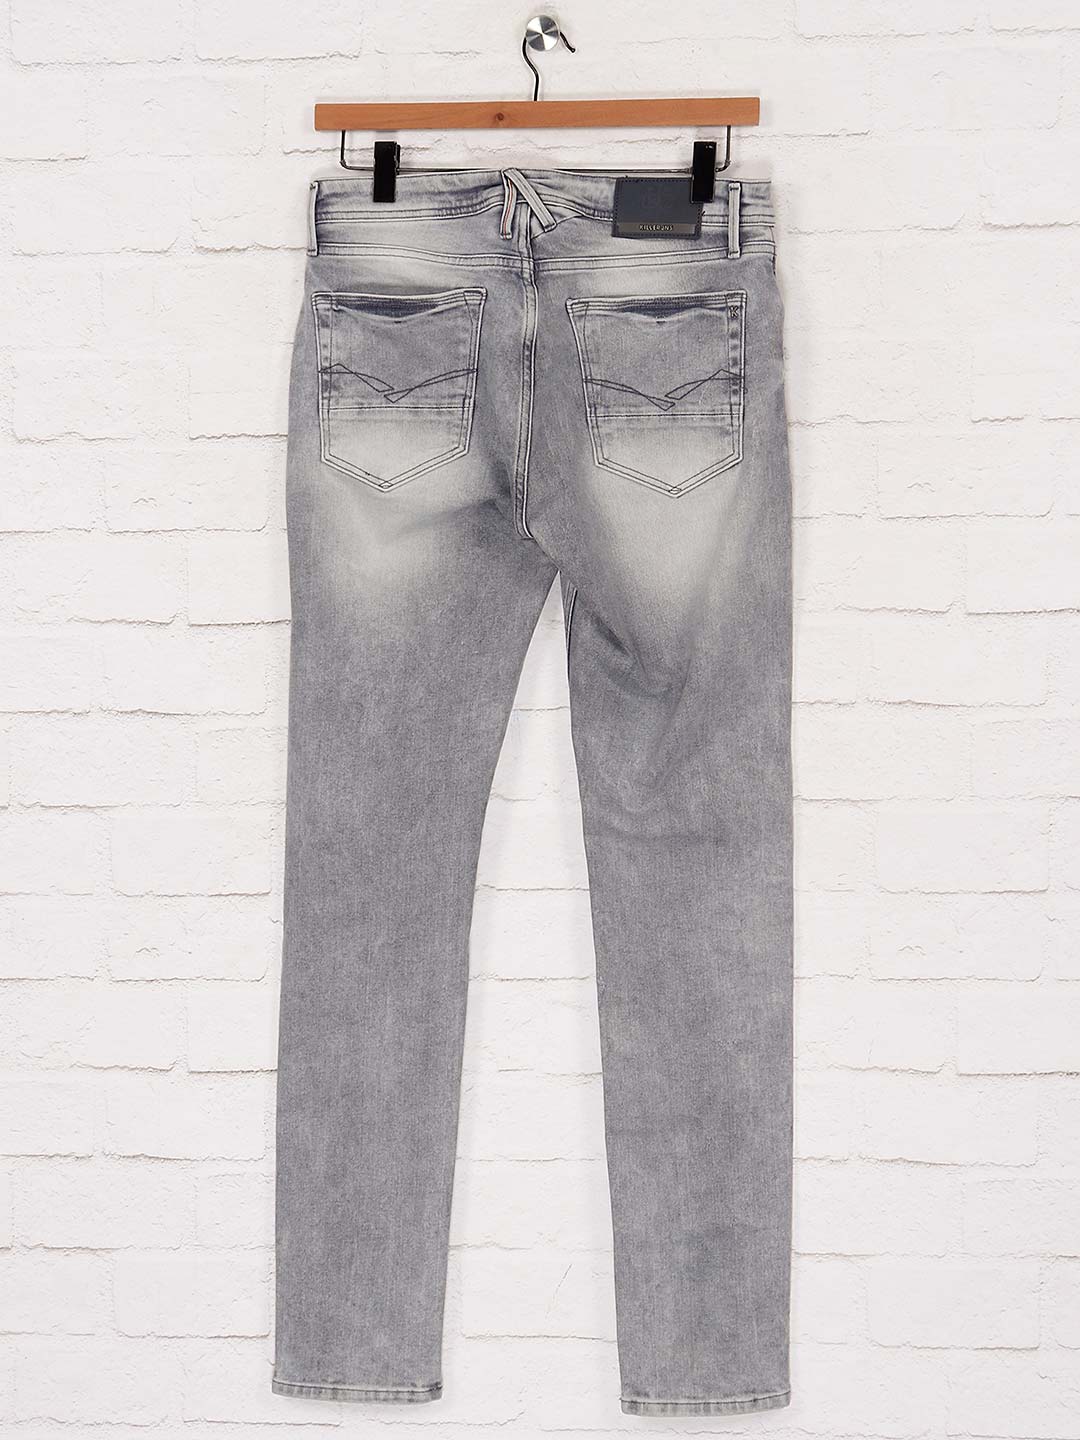 light grey distressed jeans